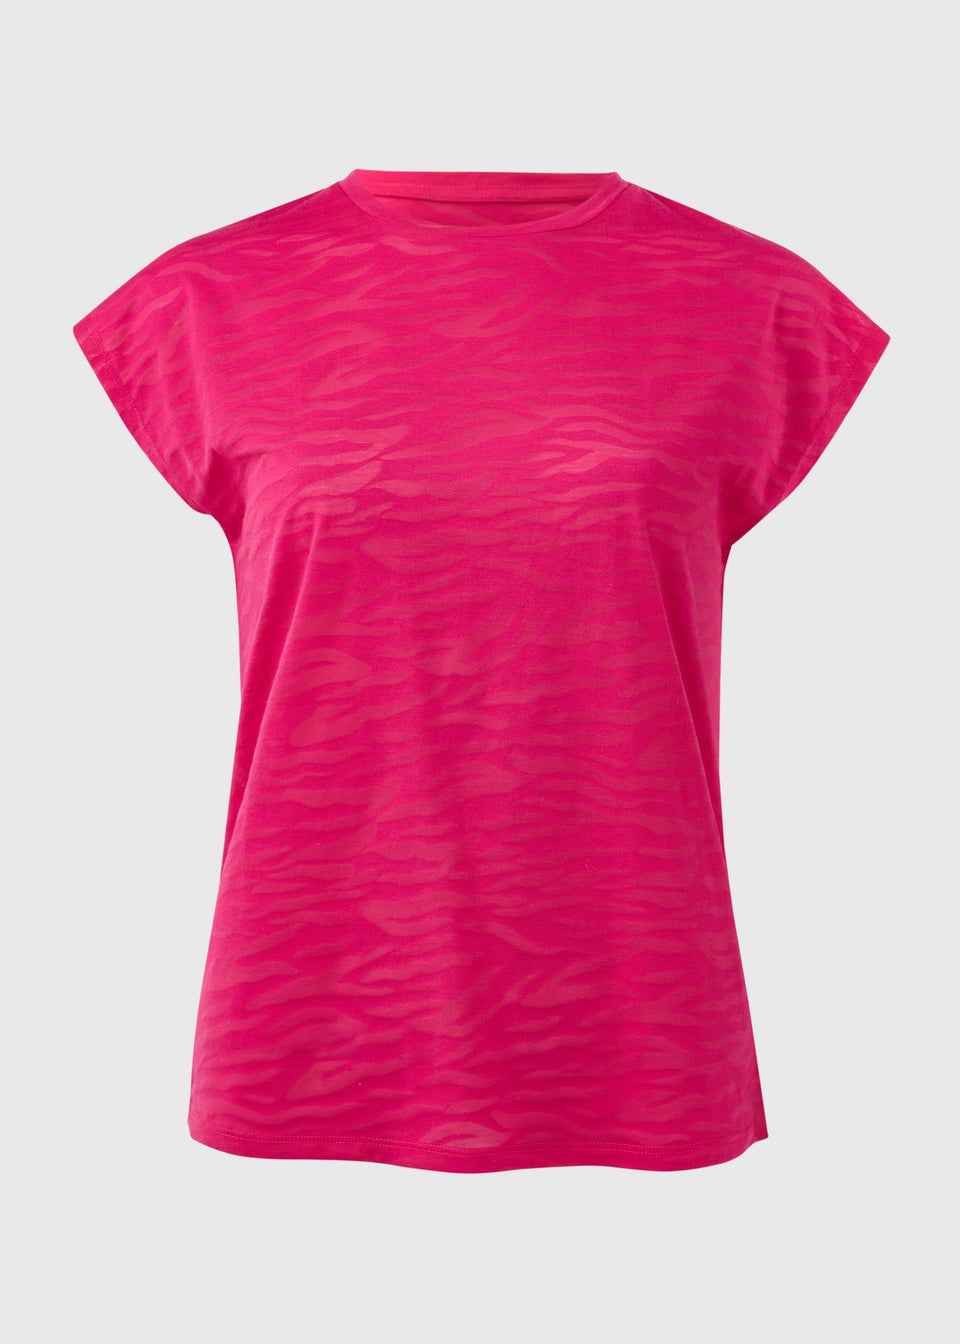 Souluxe Pink Burnout T-Shirt